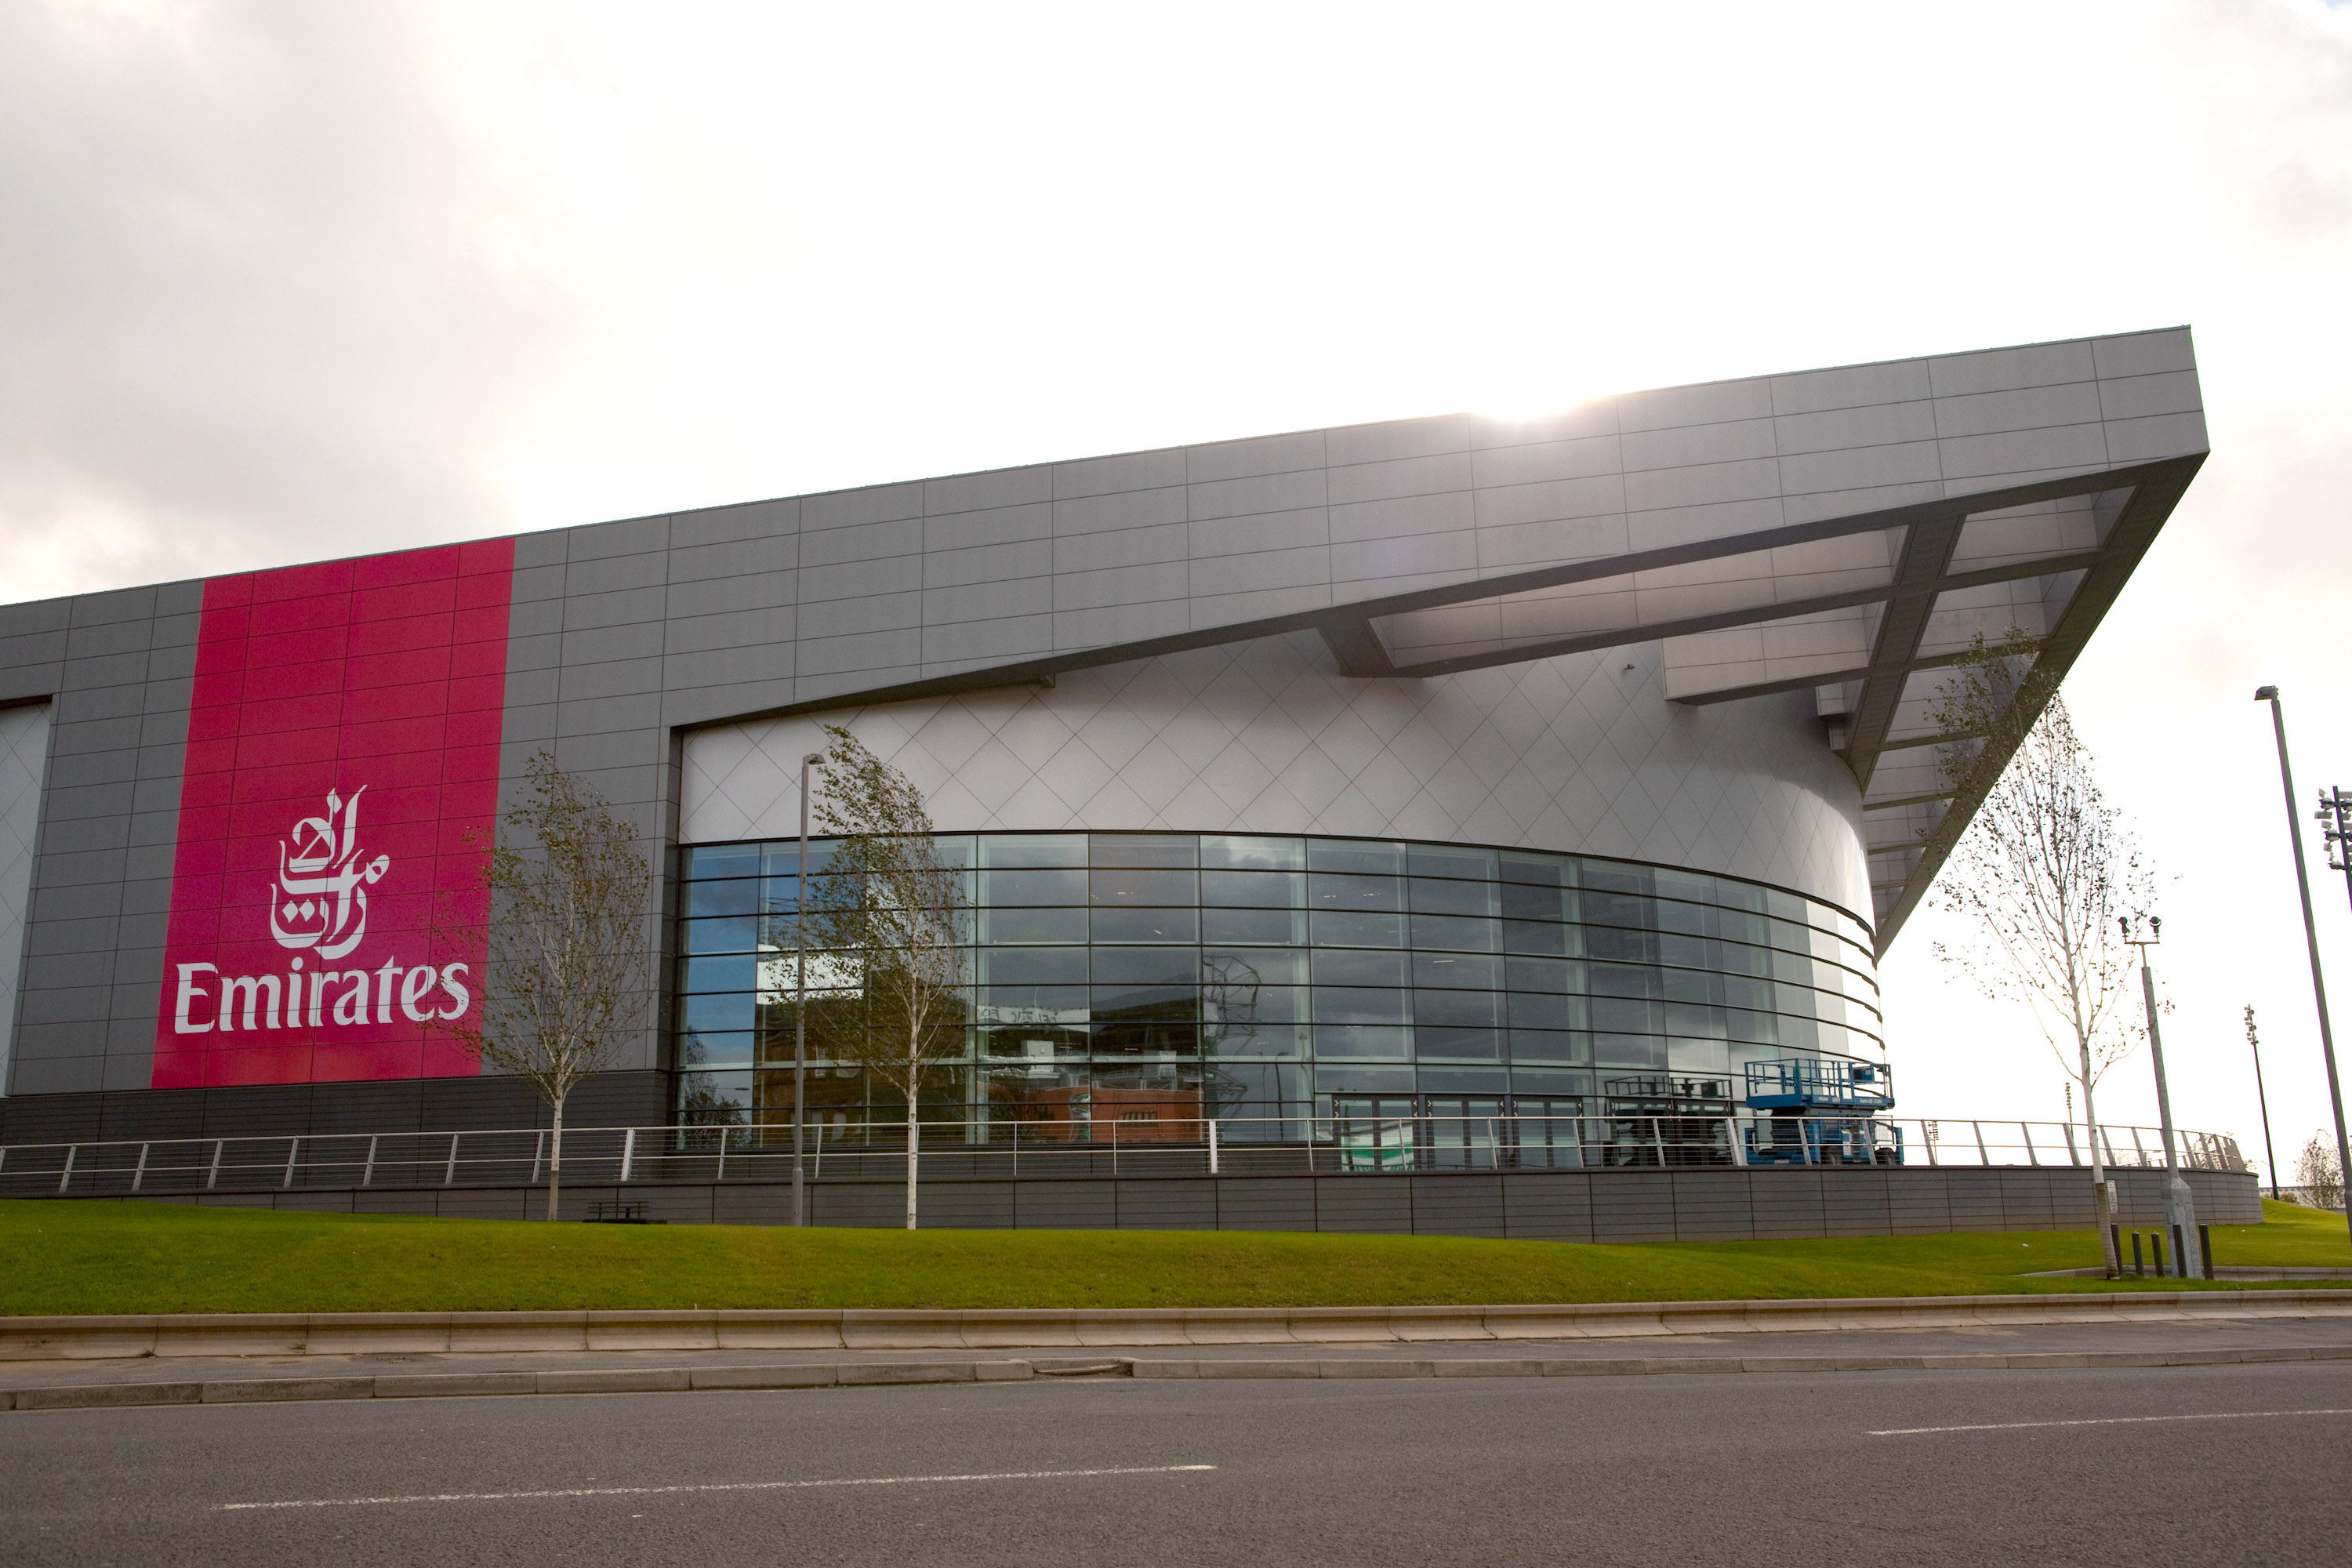 Commonwealth Arena_with_Emirates_branding_2_September_28_2012